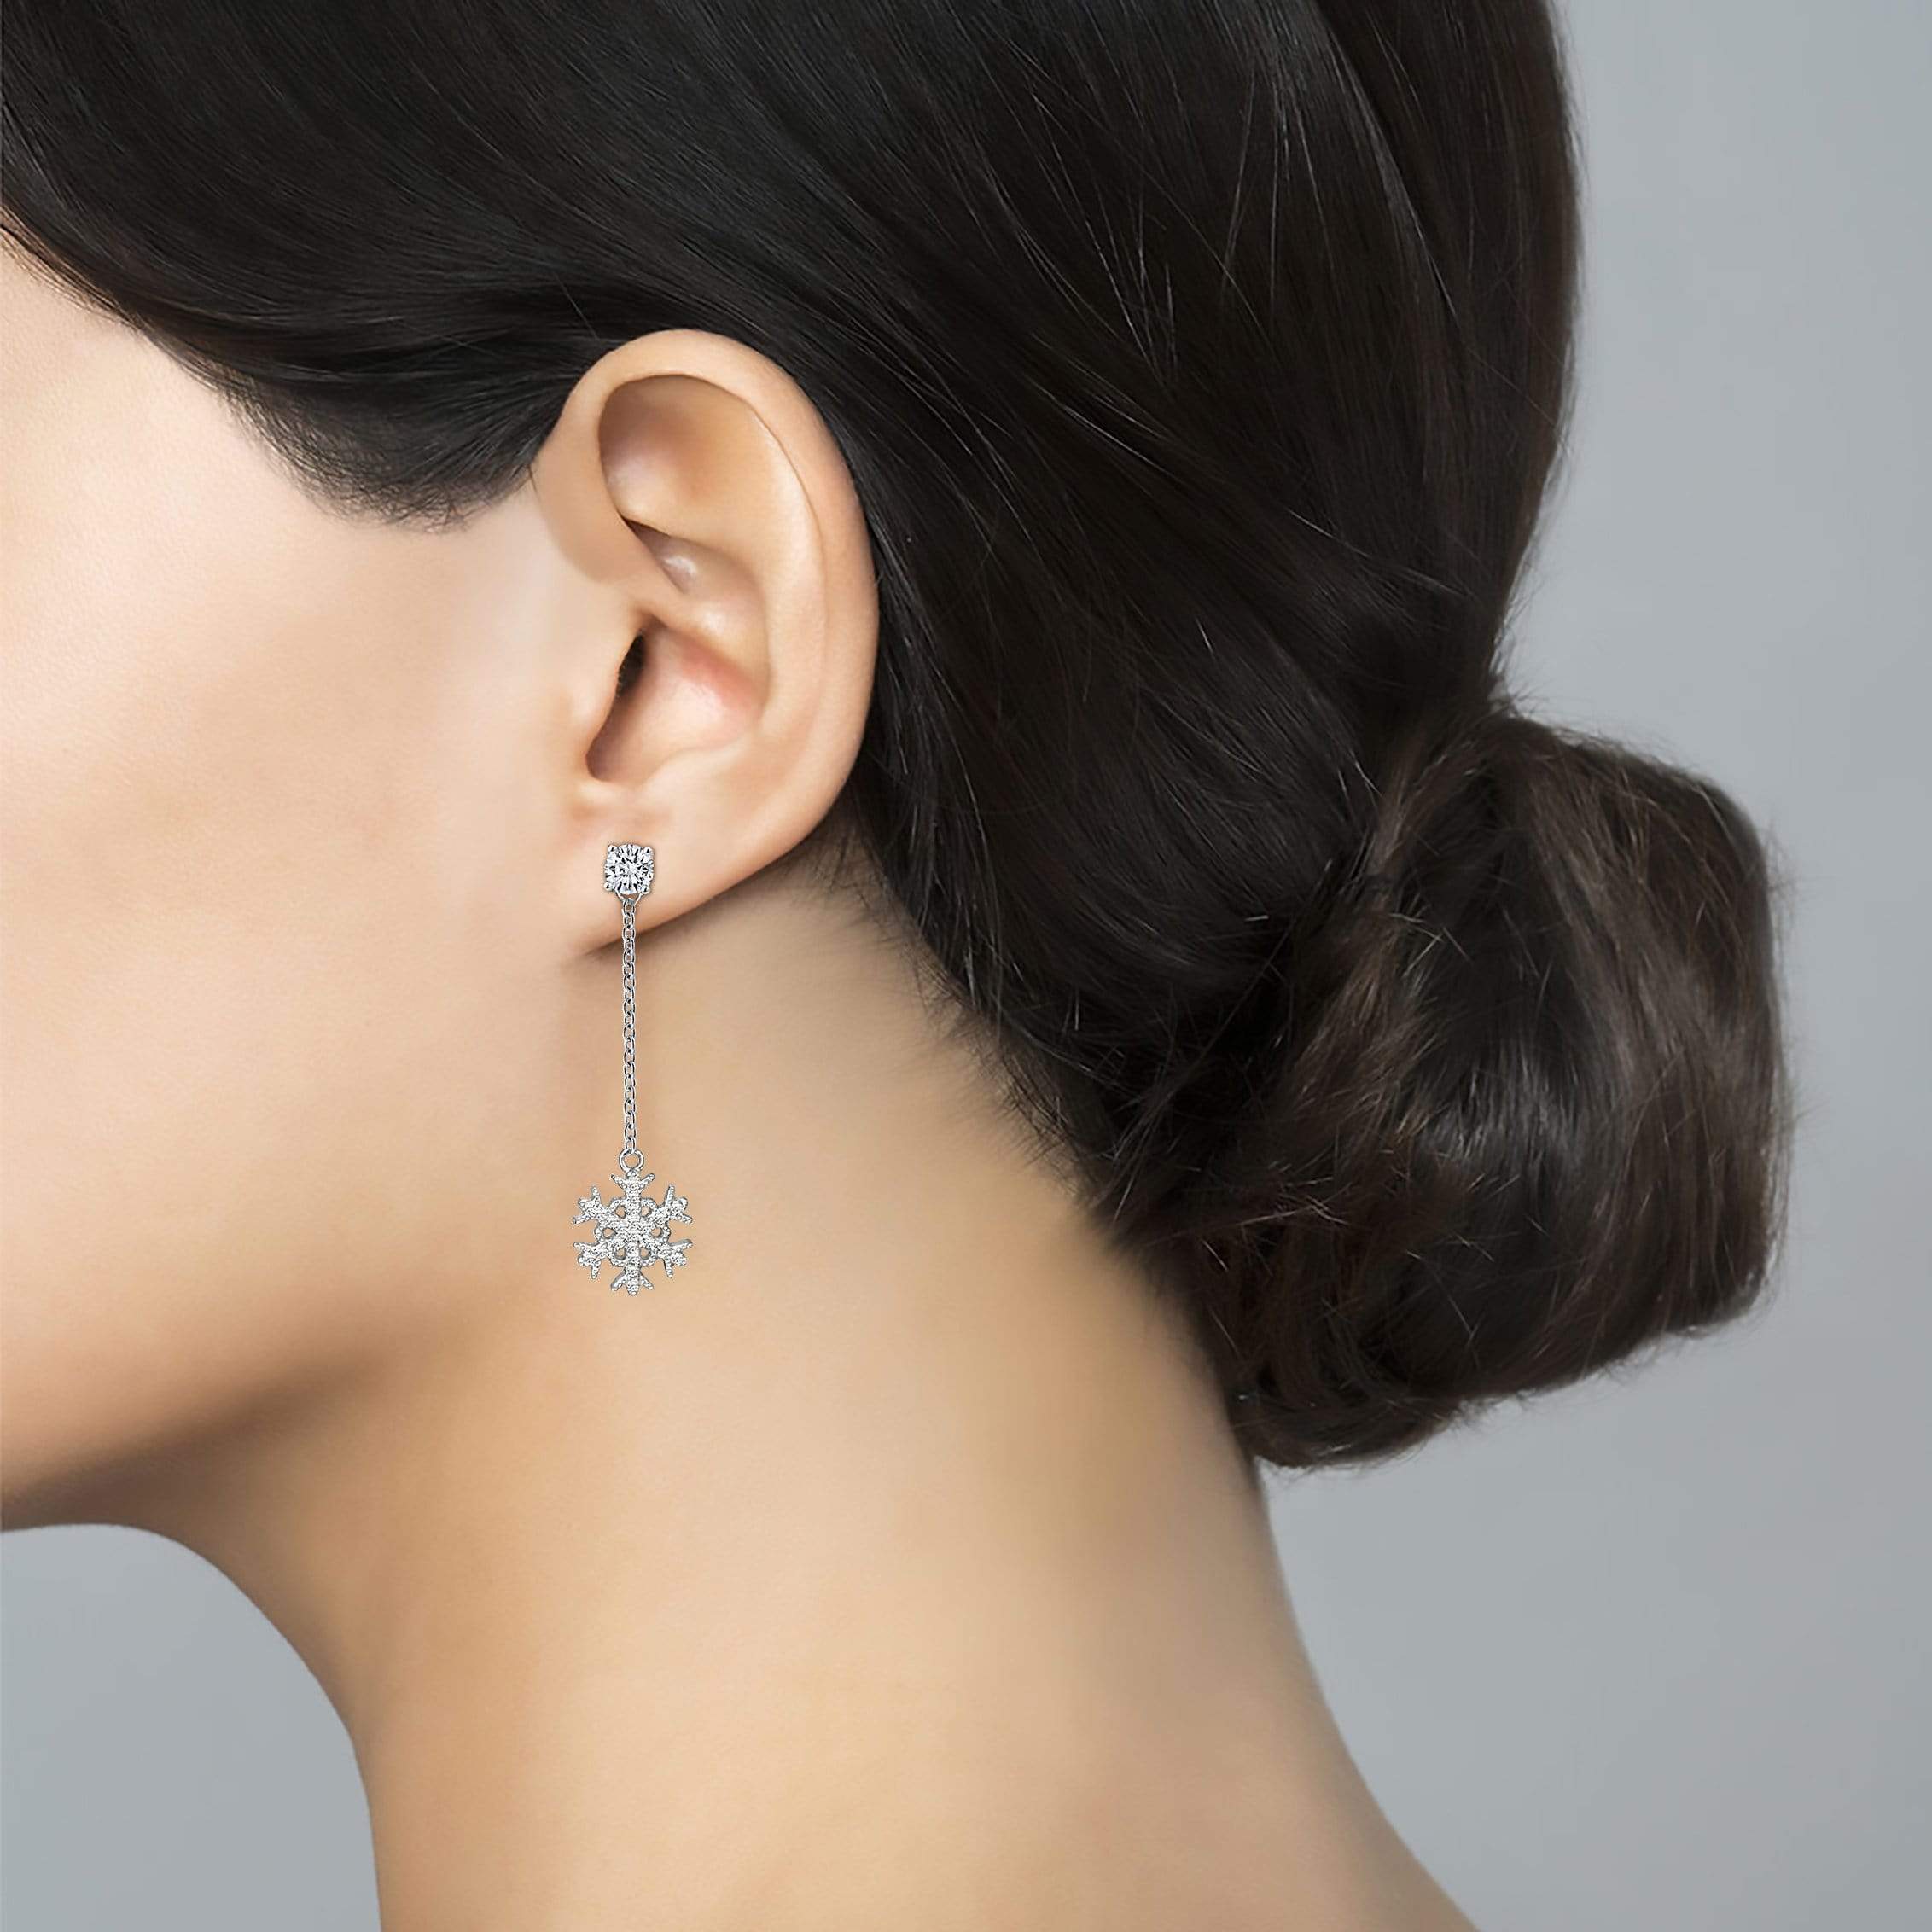 Lynora Jewellery Earring Sterling Silver Snowflake Earrings Sterling Silver